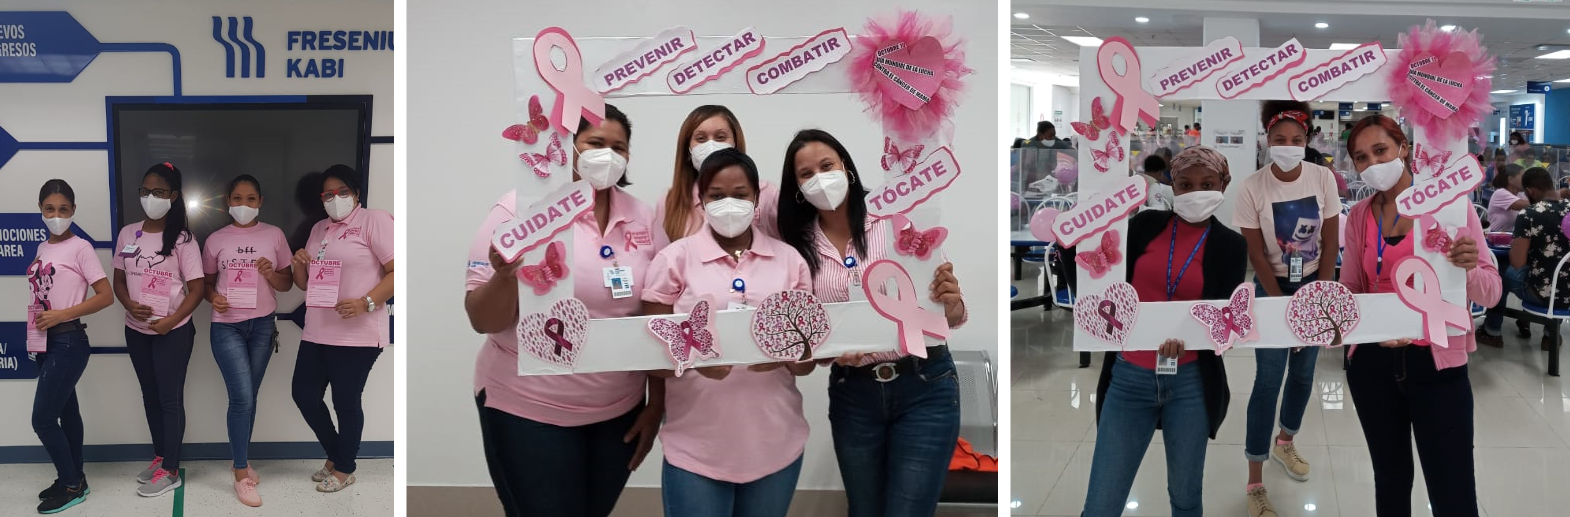 Fresenius Kabi joins Breast Cancer Awareness Campaign